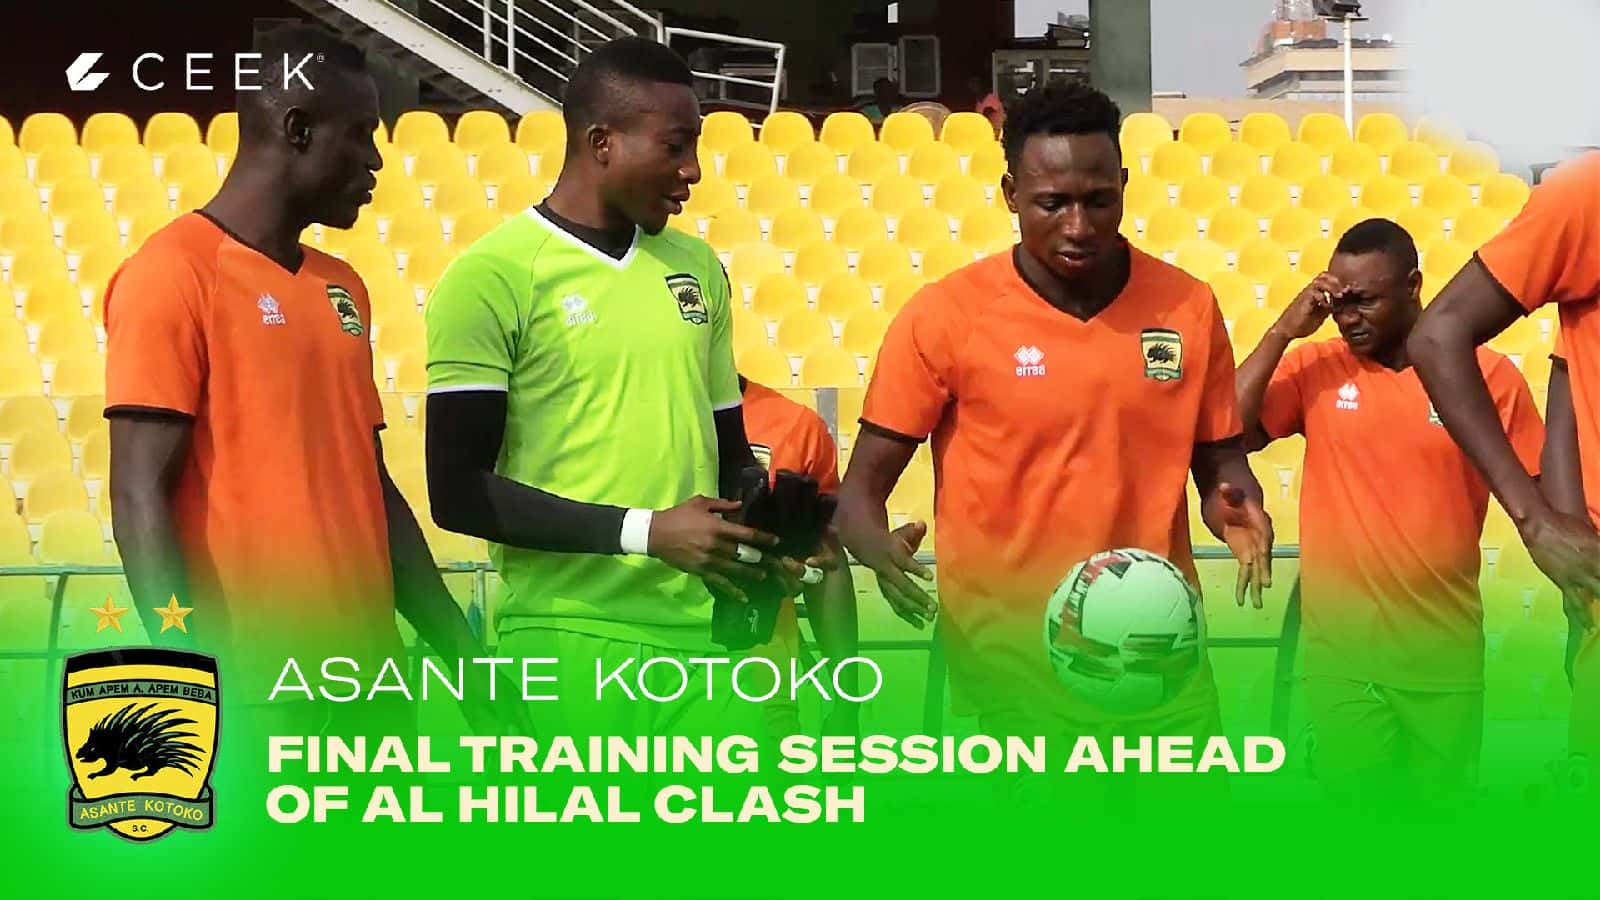 Asante Kotoko final training session ahead of Al Hilal clash